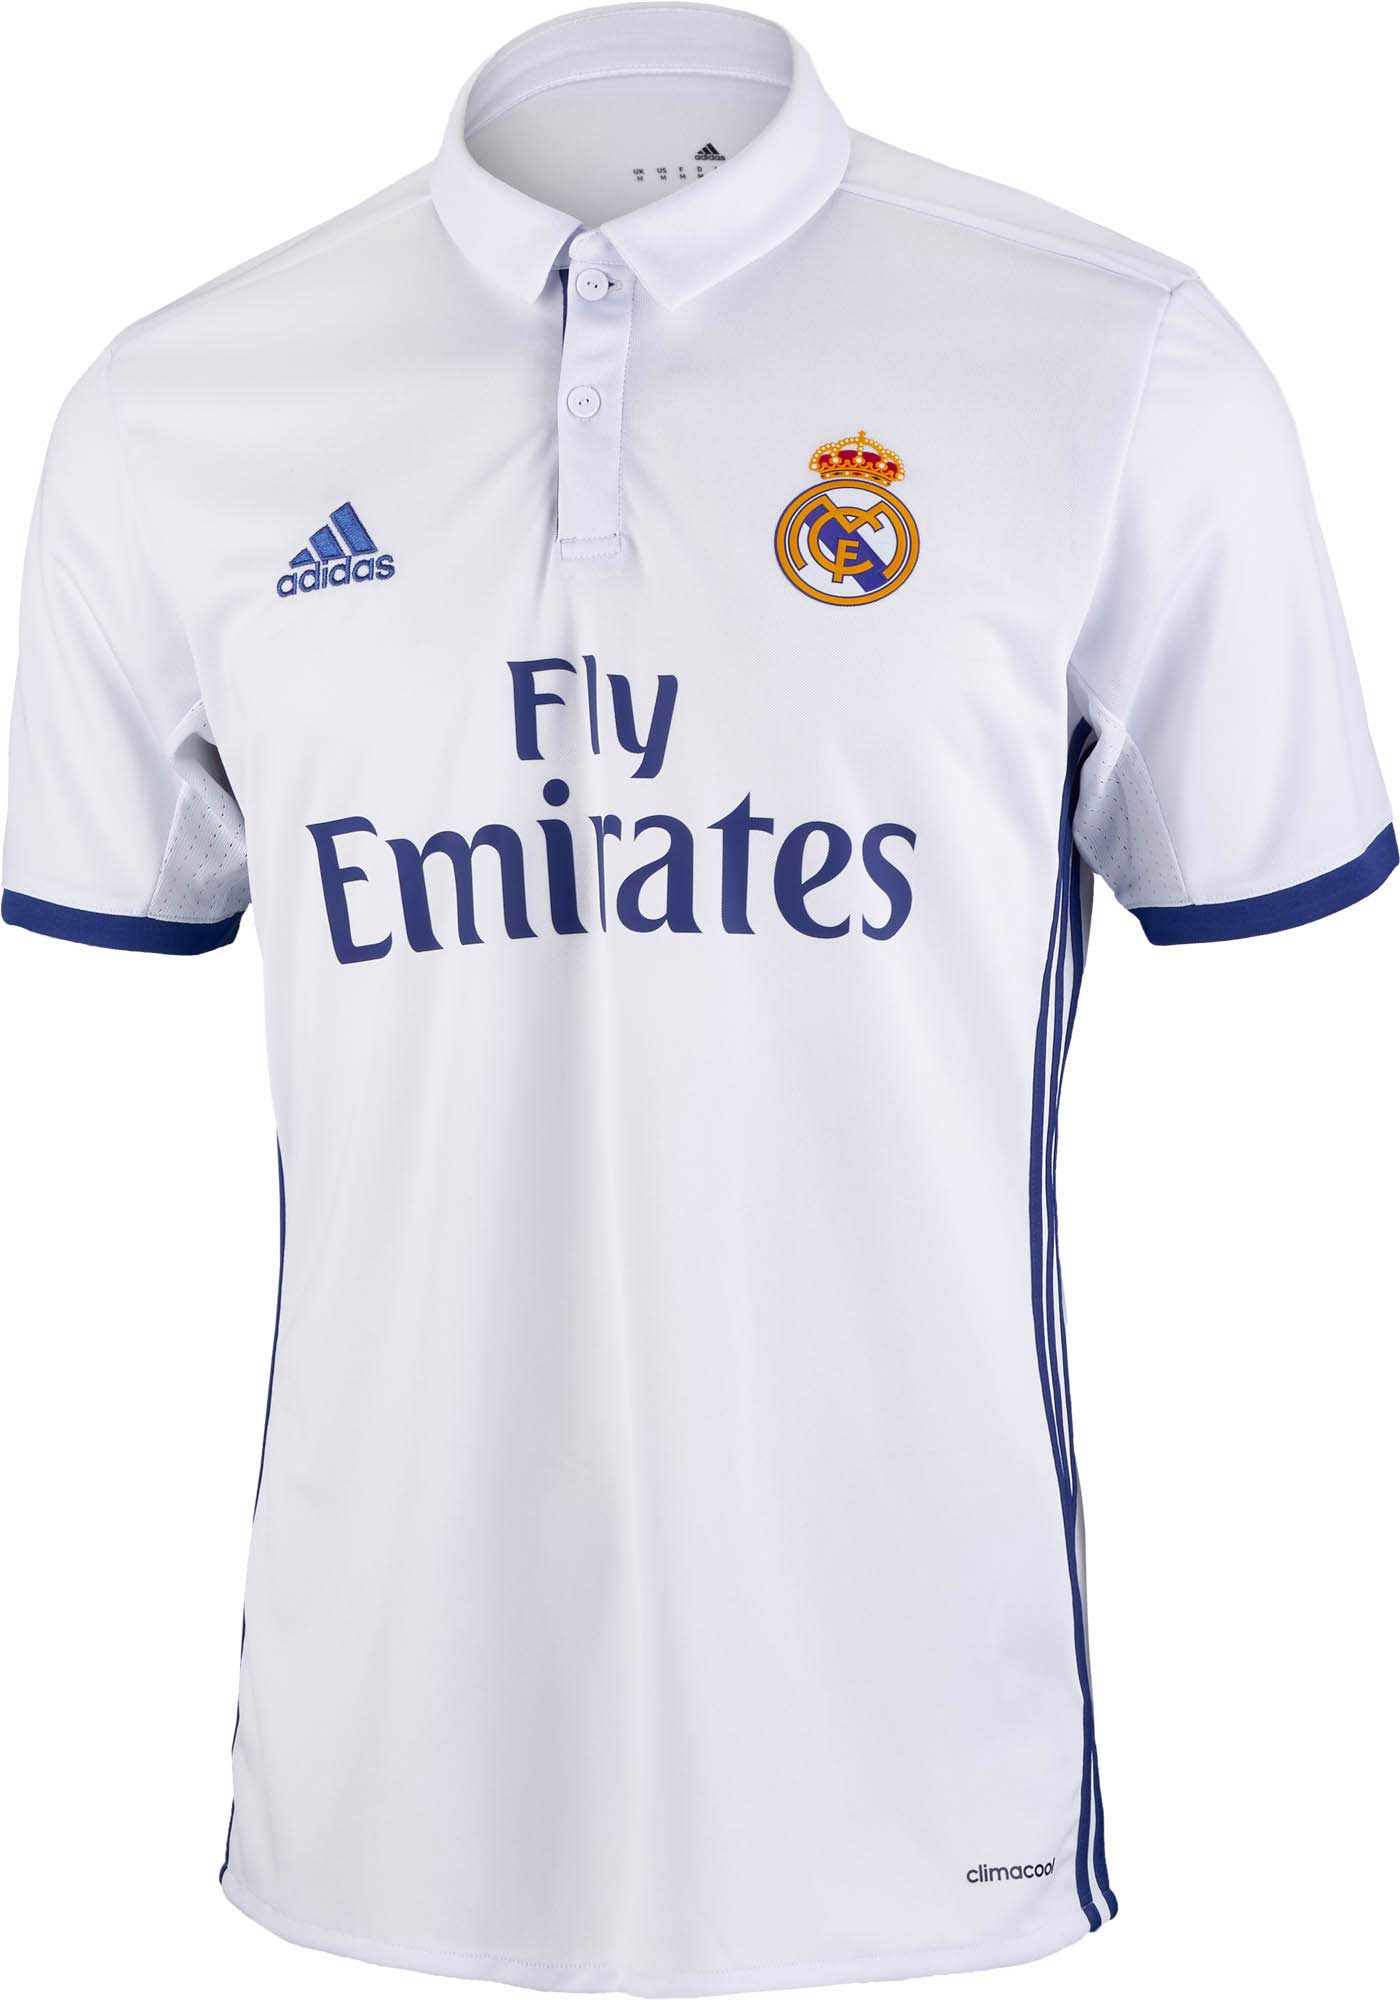 adidas Kids Real Madrid Jersey - 2016/17 Real Madrid Home Jerseys